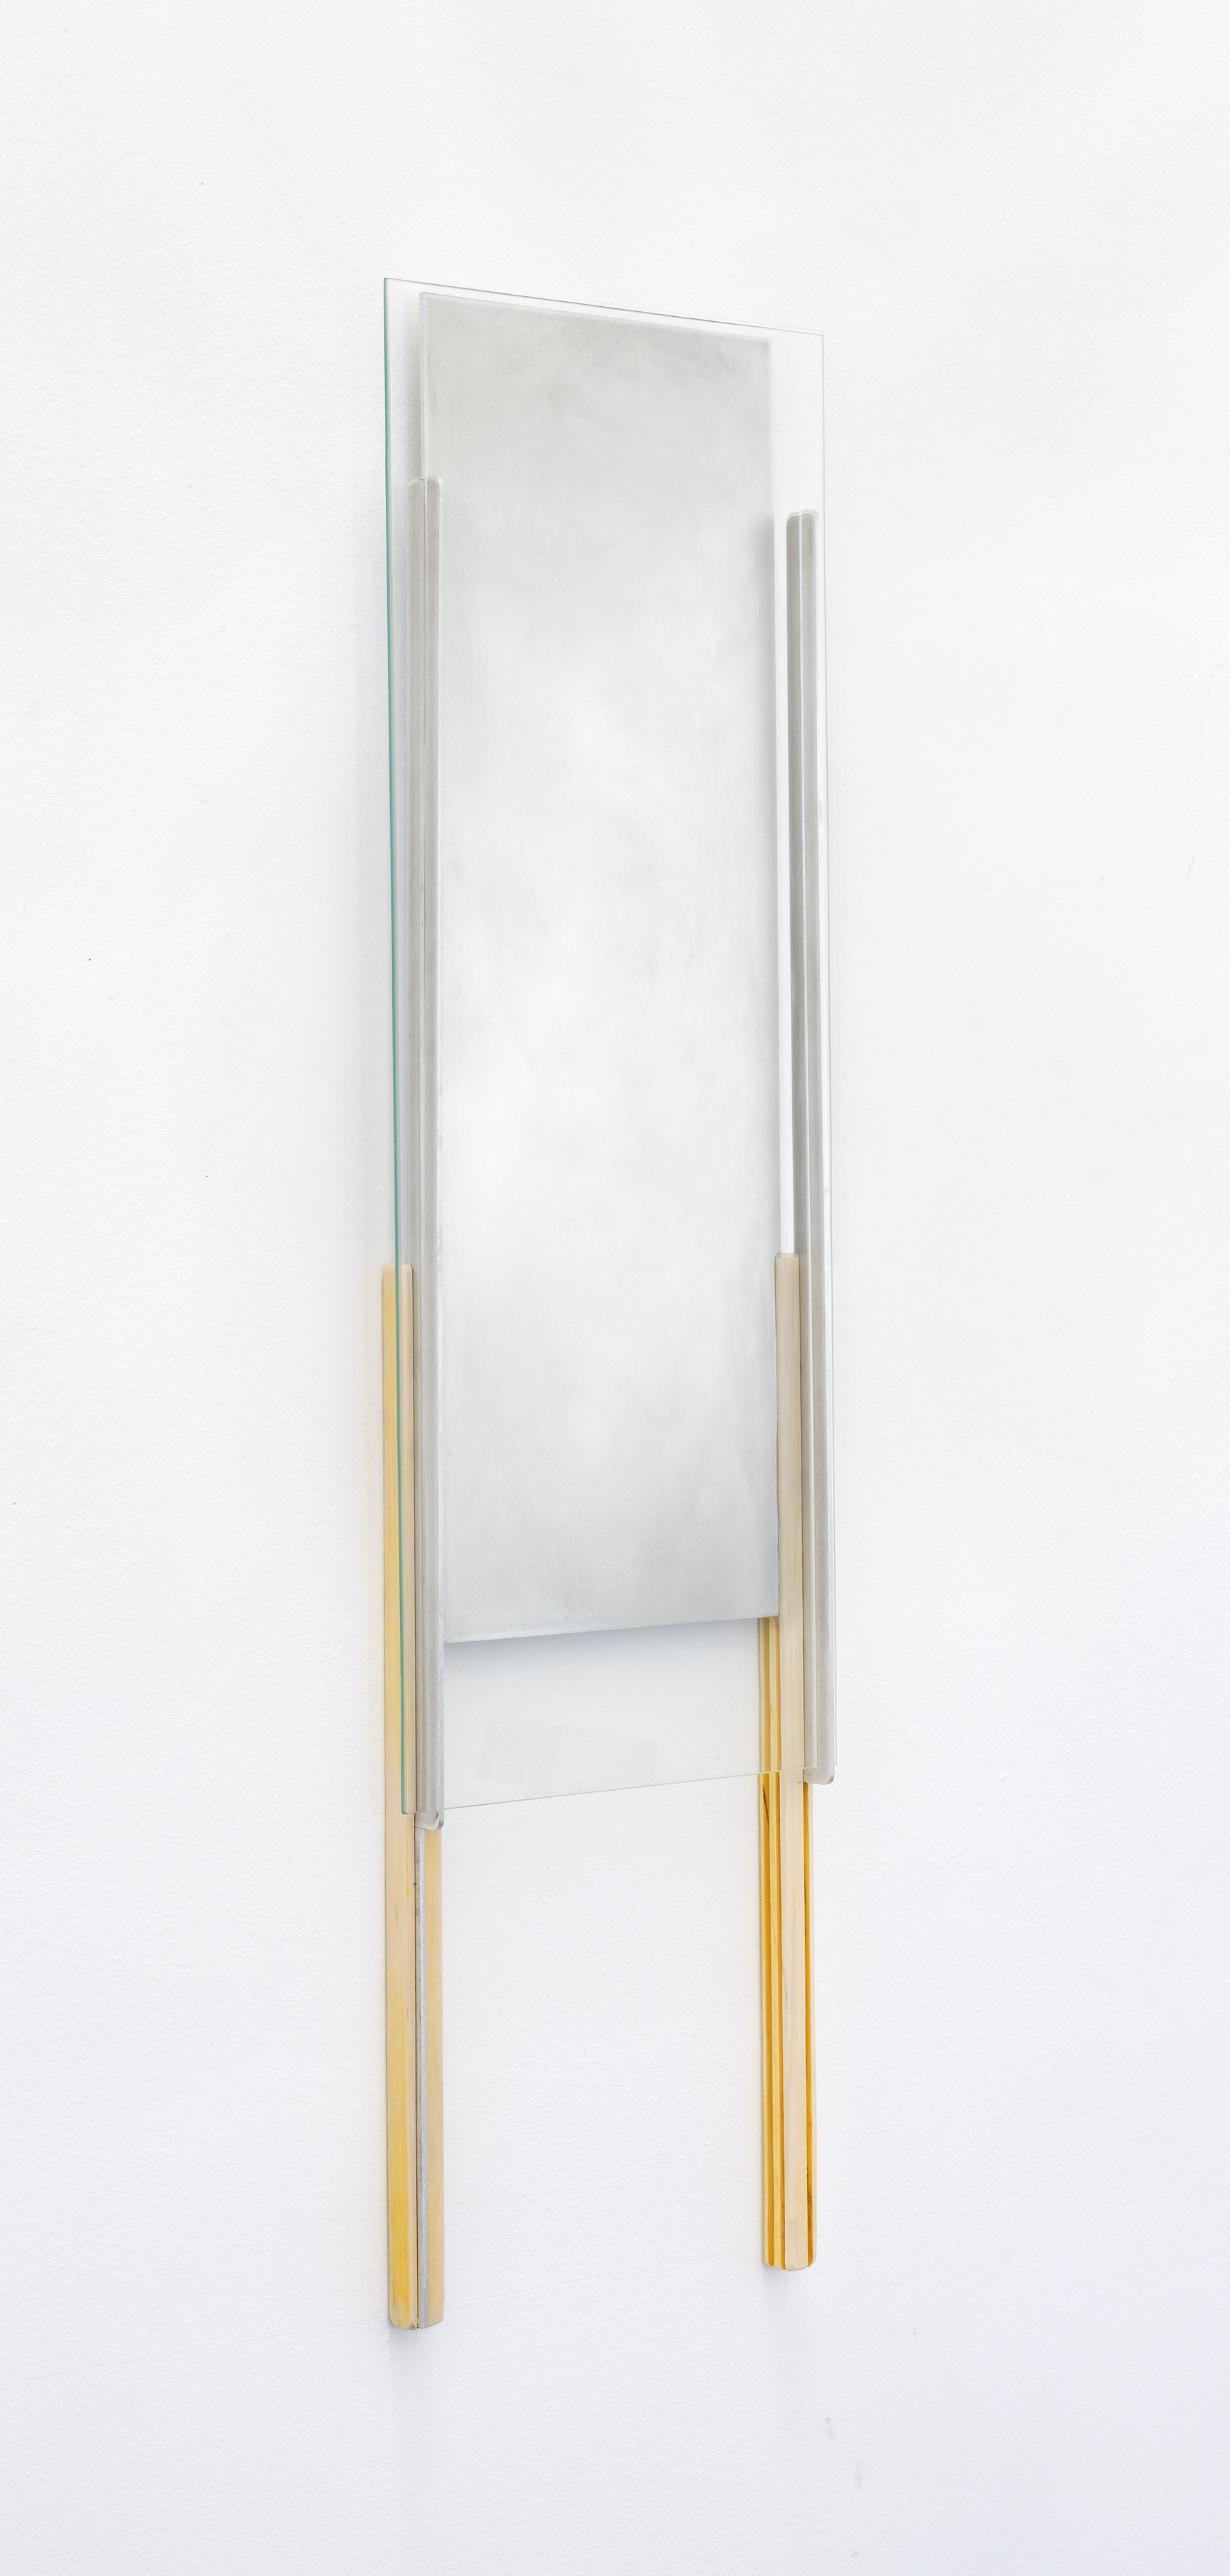  Elizabeth Orr,  Turning Familiar,  2020, 38" H x 11" W x 2" D, Aluminum, turmeric, wood, glass 